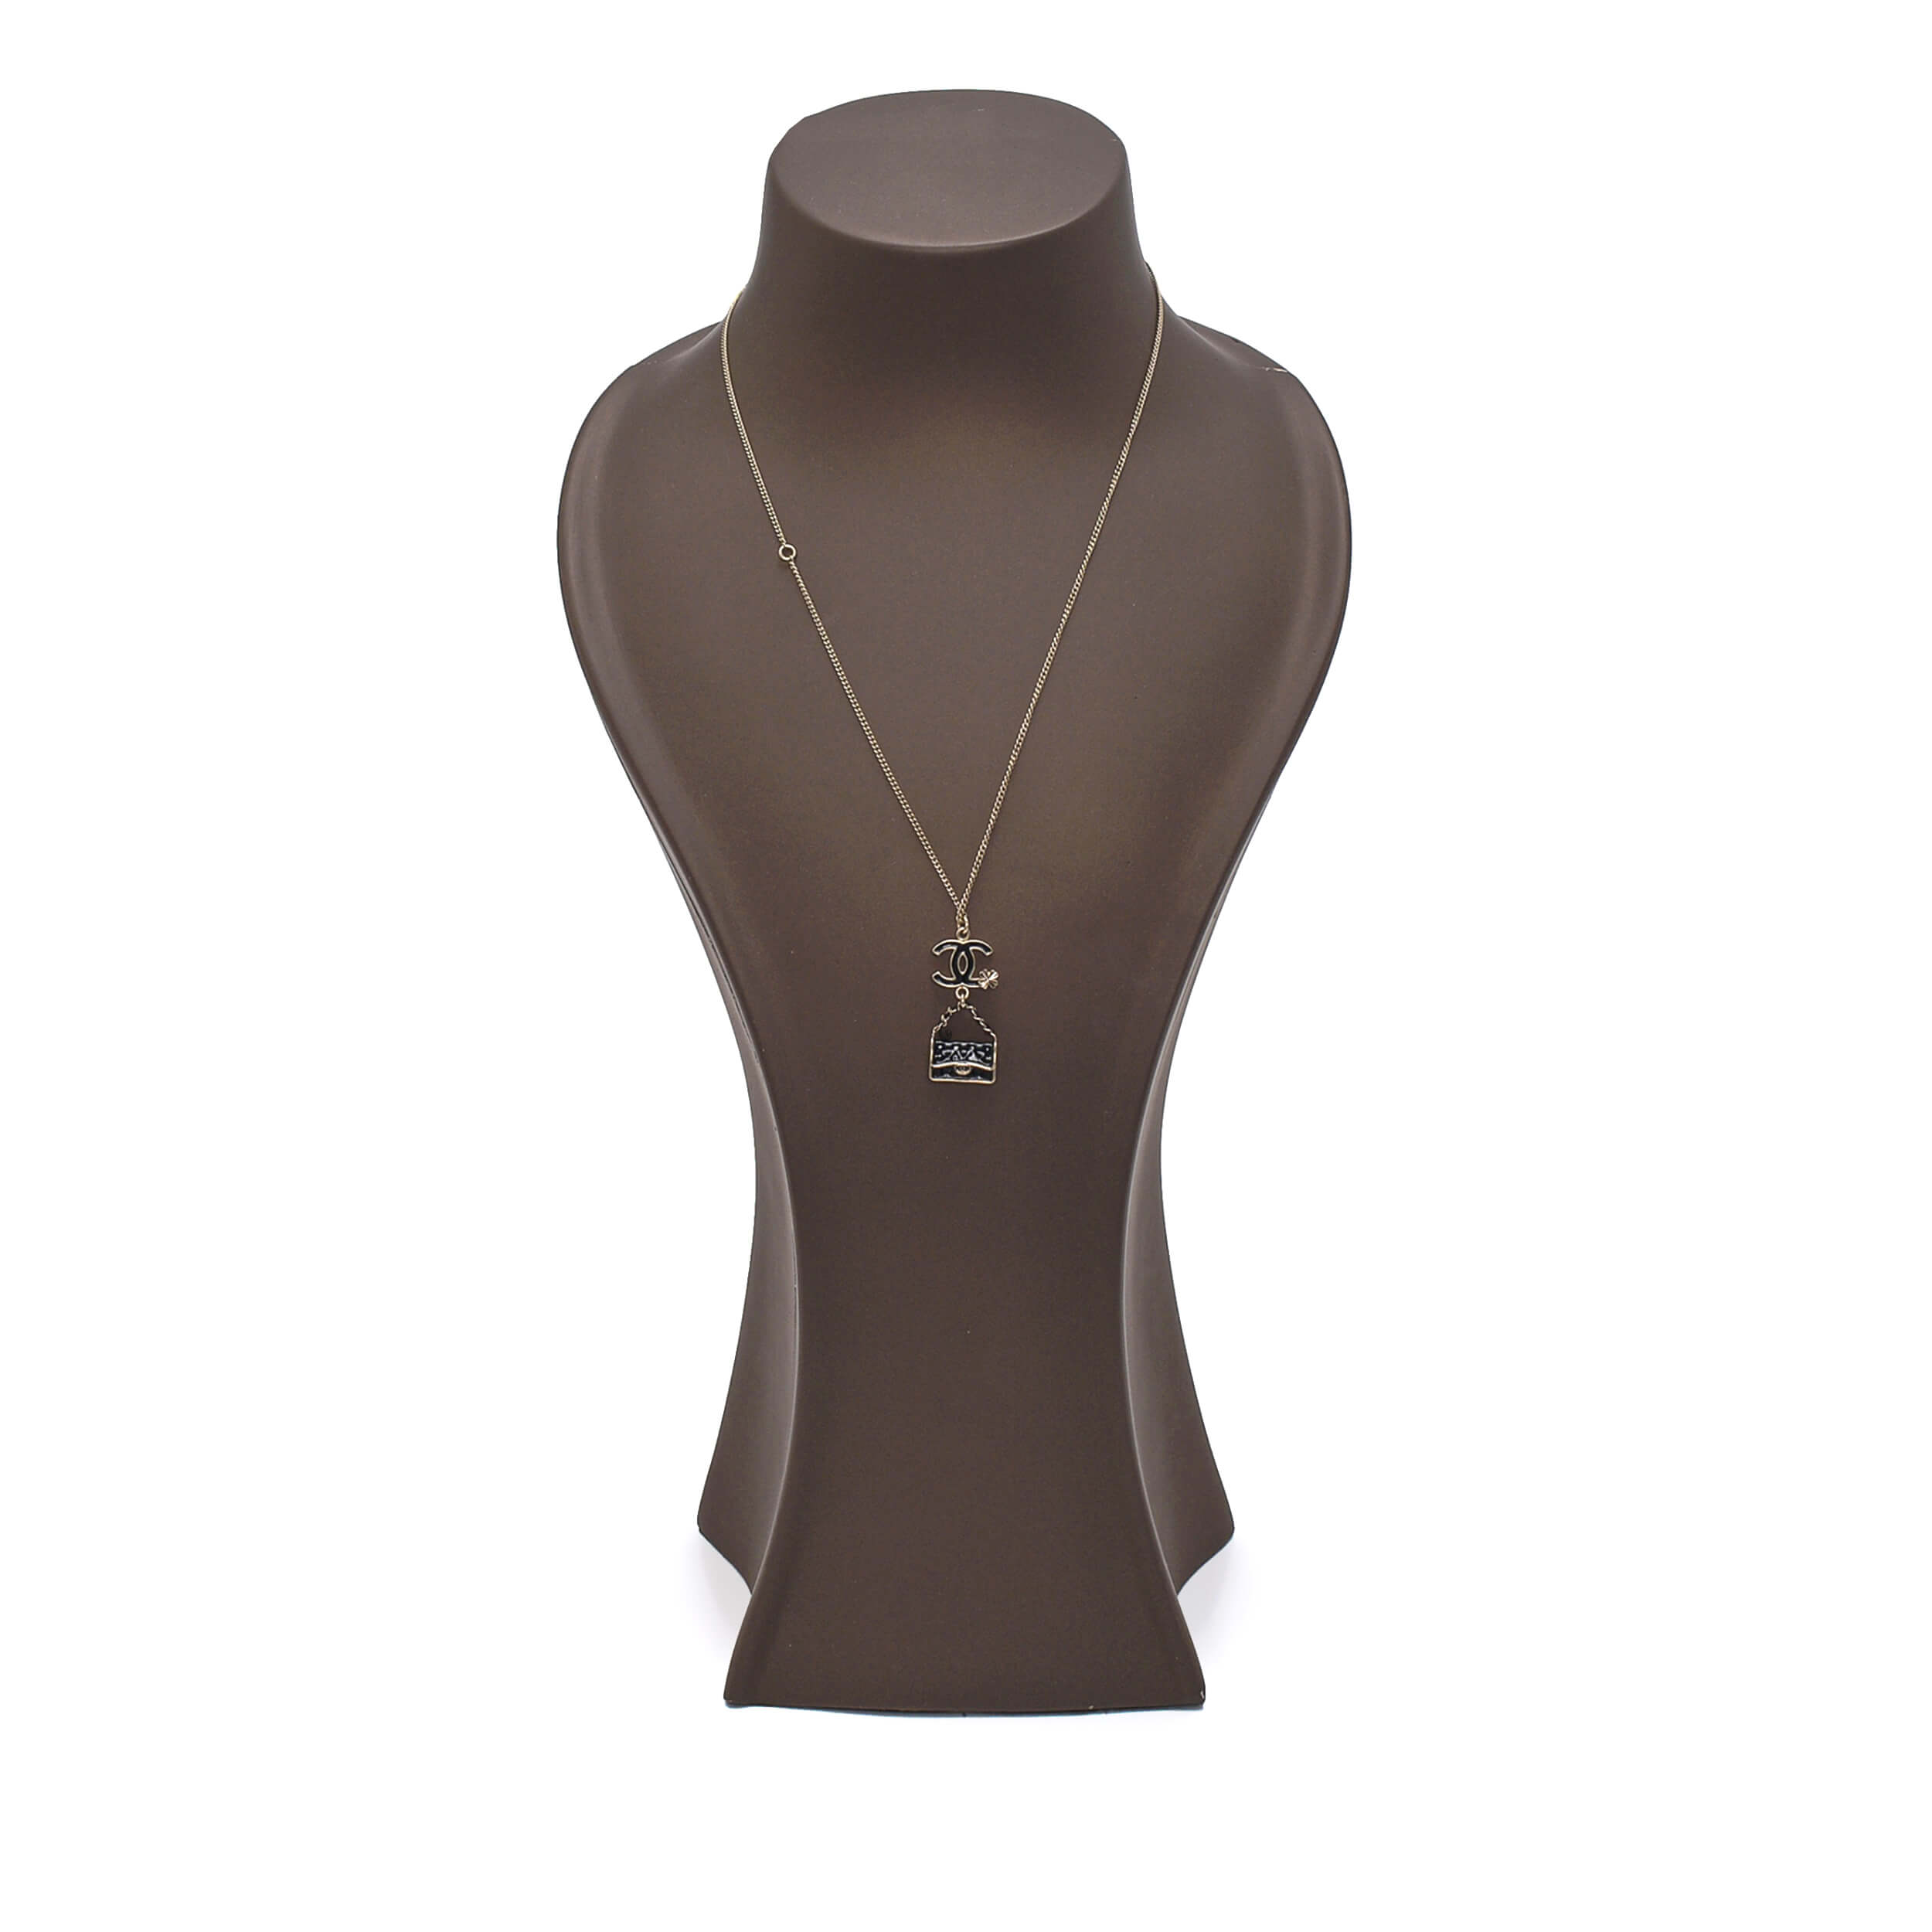 Chanel - Gold Tone&Black Bag CC Charm Necklace